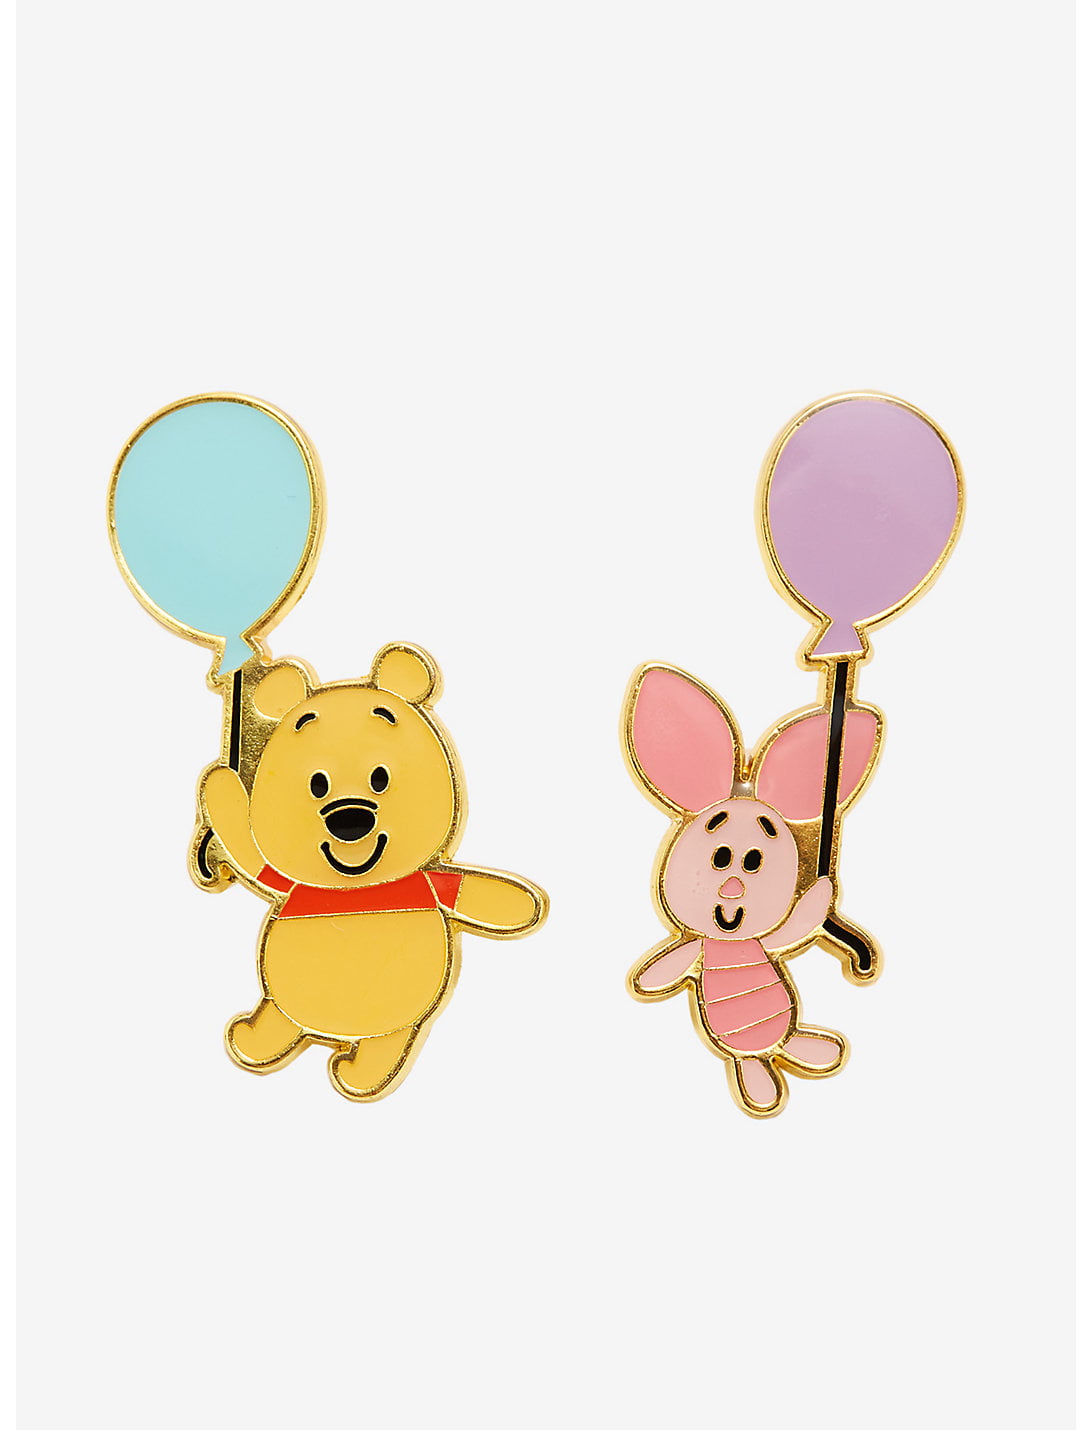 Winnie the Pooh enamel pin set